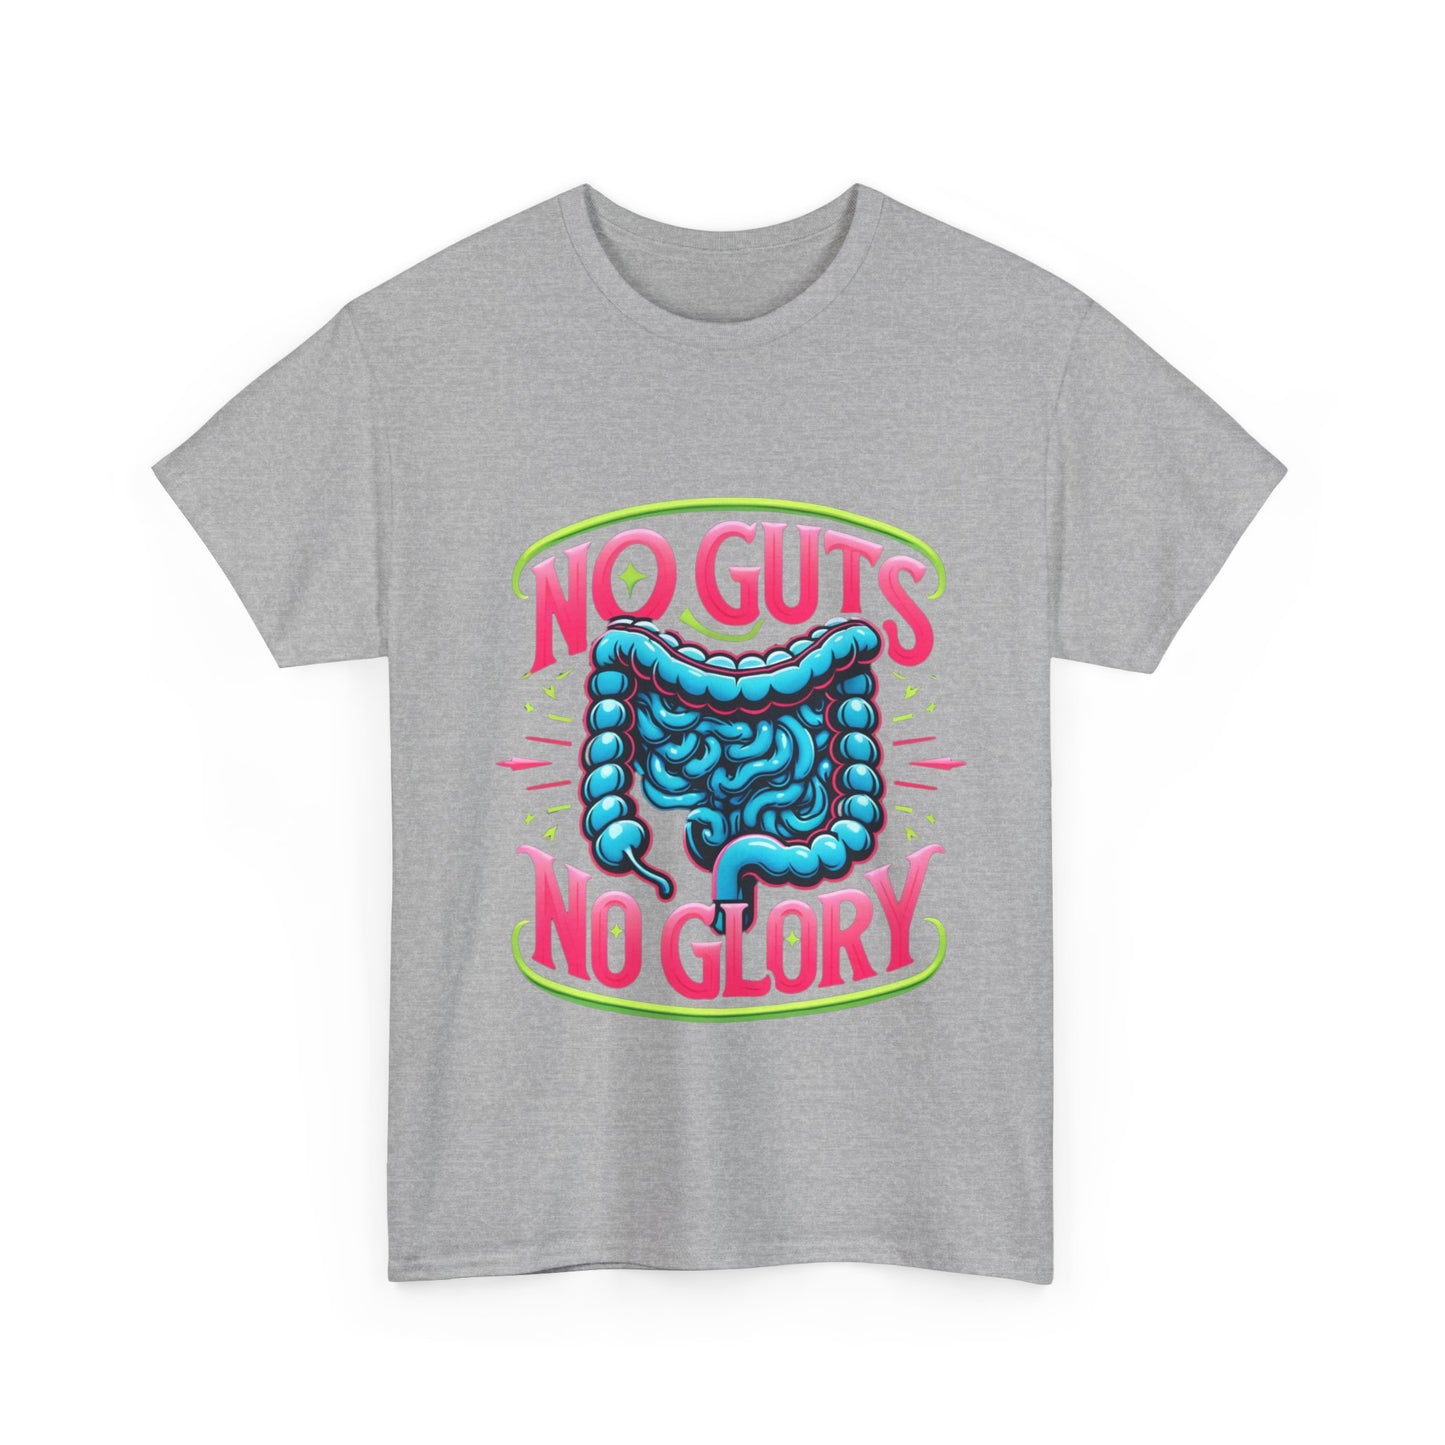 Y.M.L.Y. "No Guts No Glory" Motivational T-Shirts Inspirational T-Shirt Urban Wear Street Wear Classic Comfort Tee